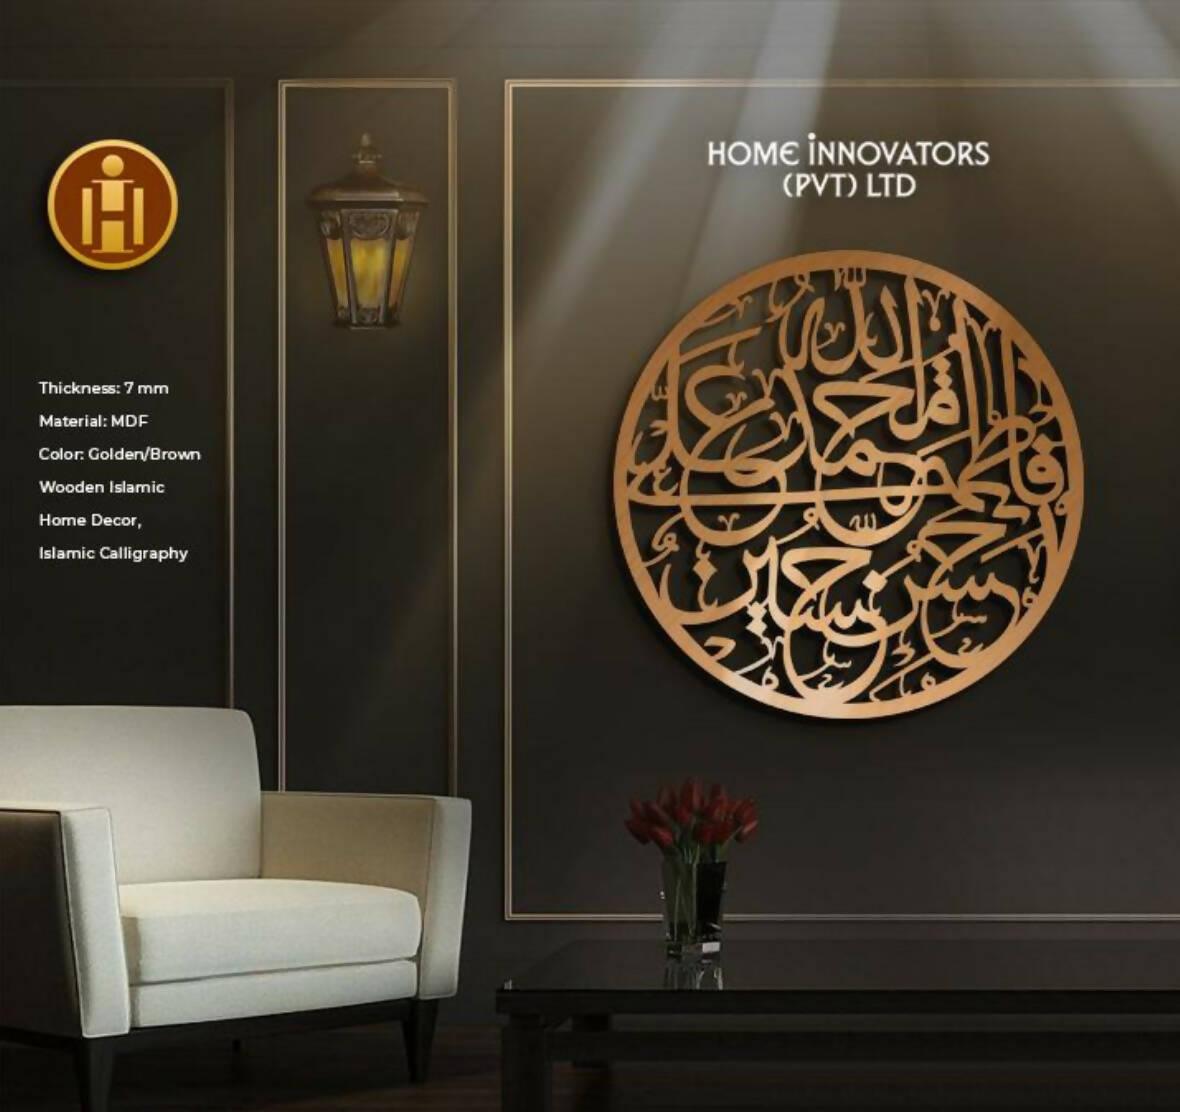 Wooden Islamic Home Décor Islamic Calligraphy HI-0047 - ValueBox